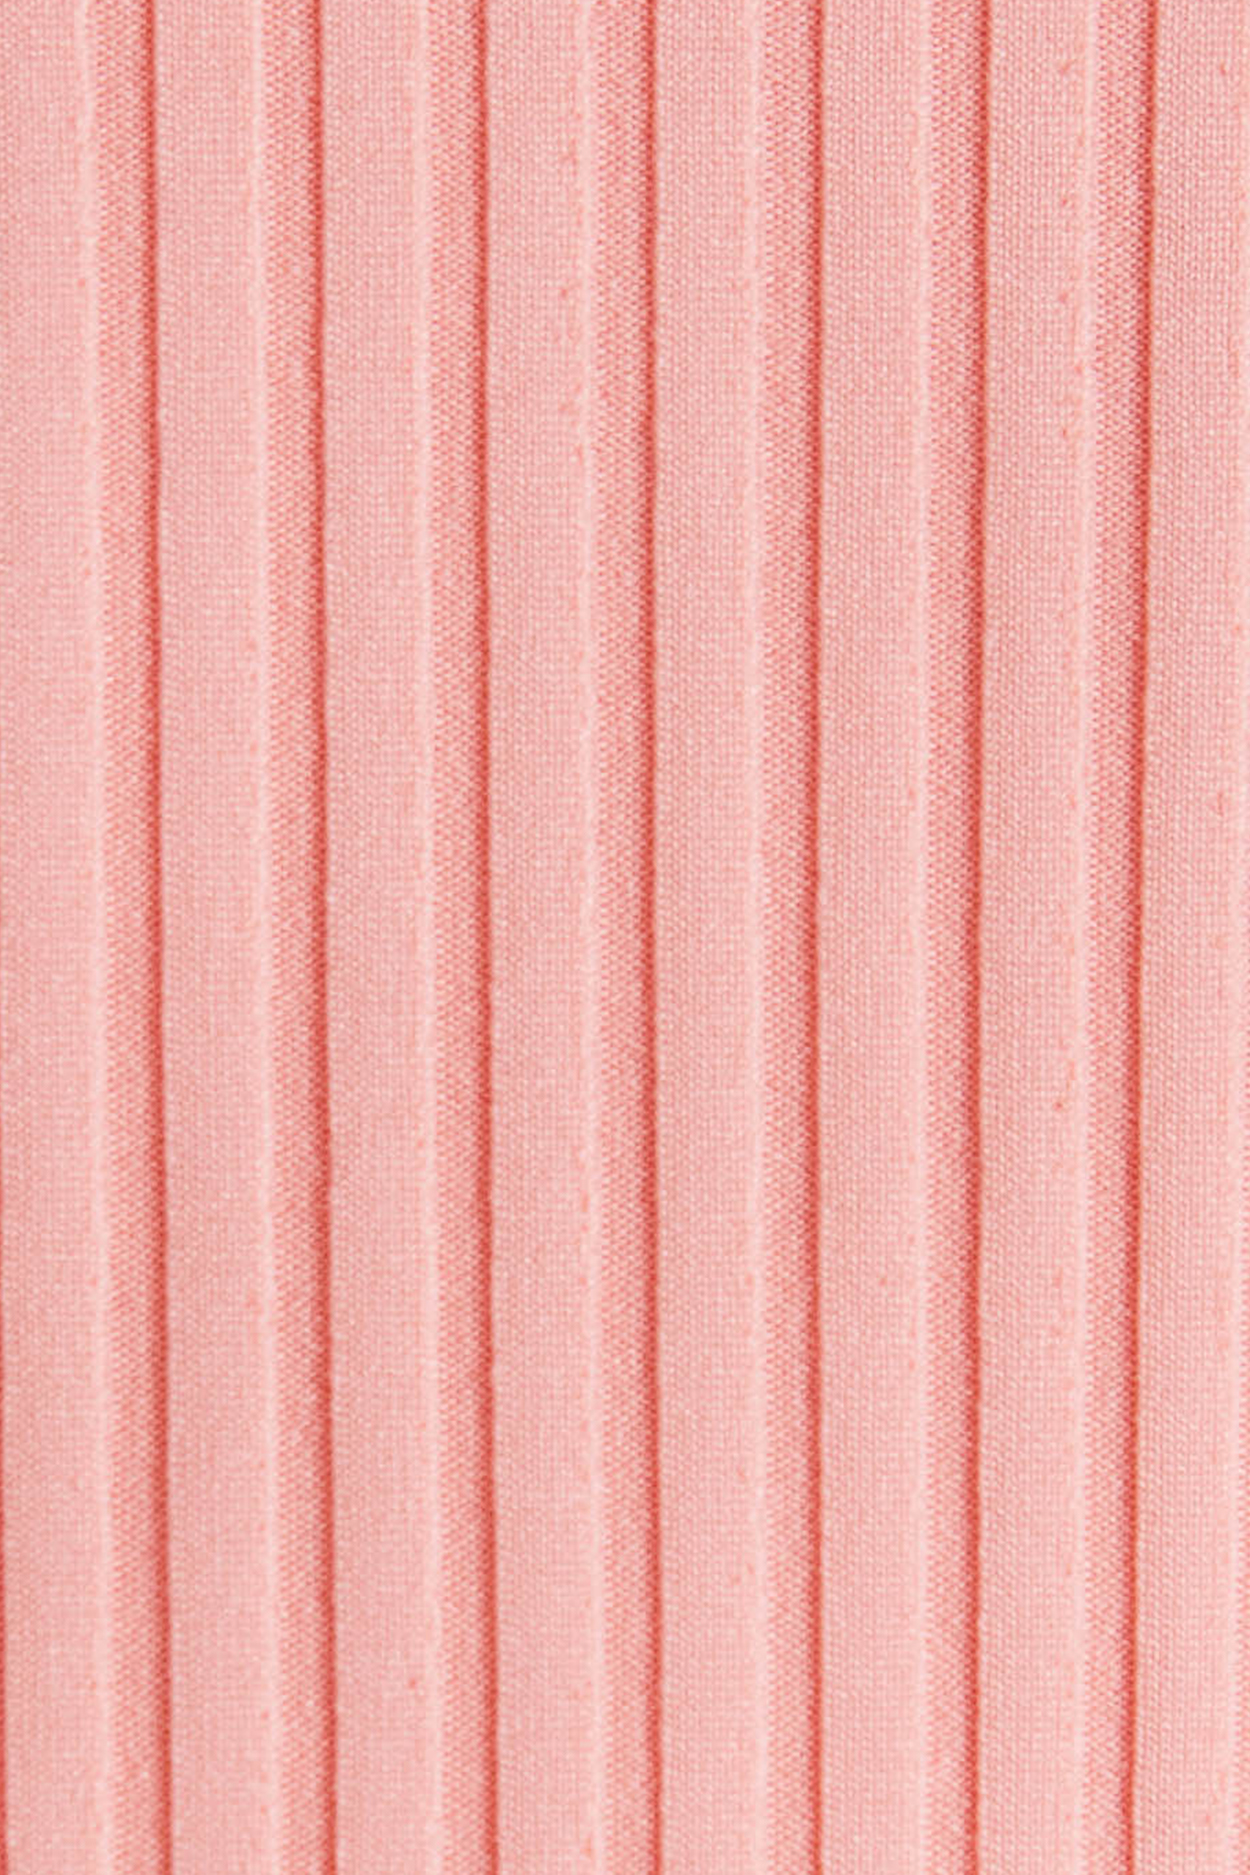 Pink Coral EcoRib Fabric Swatch